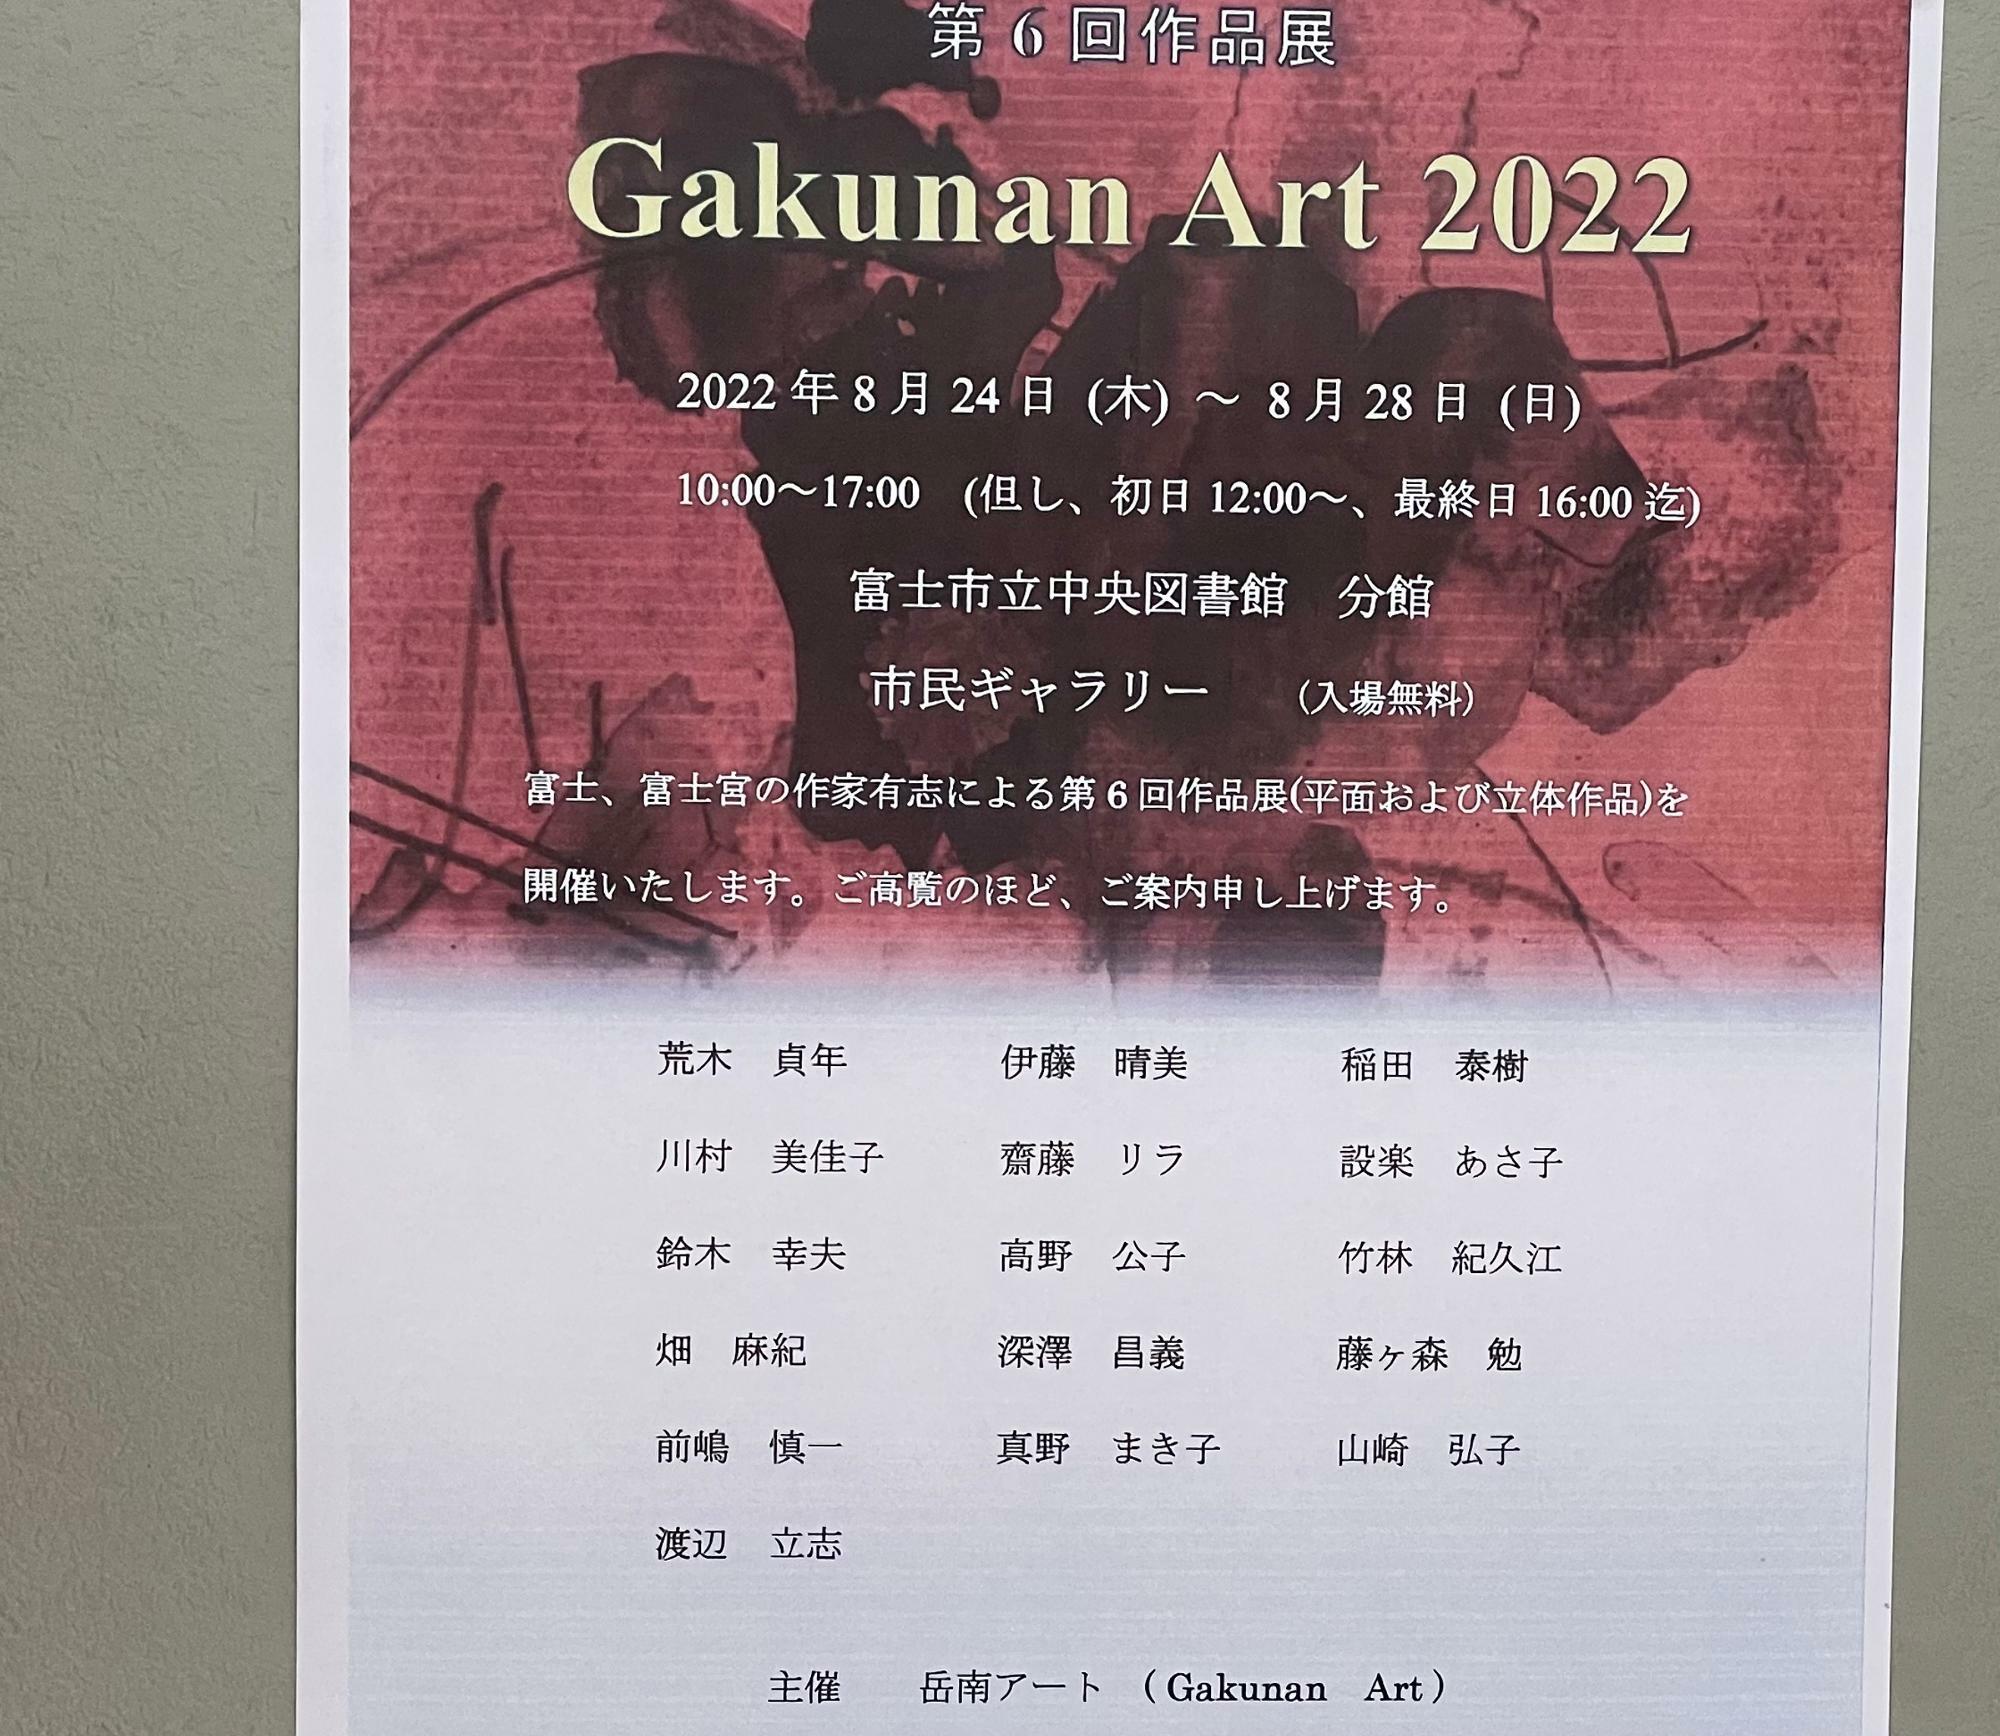 「Gakunan Art 」は毎年、富士市、富士宮市で開催されています